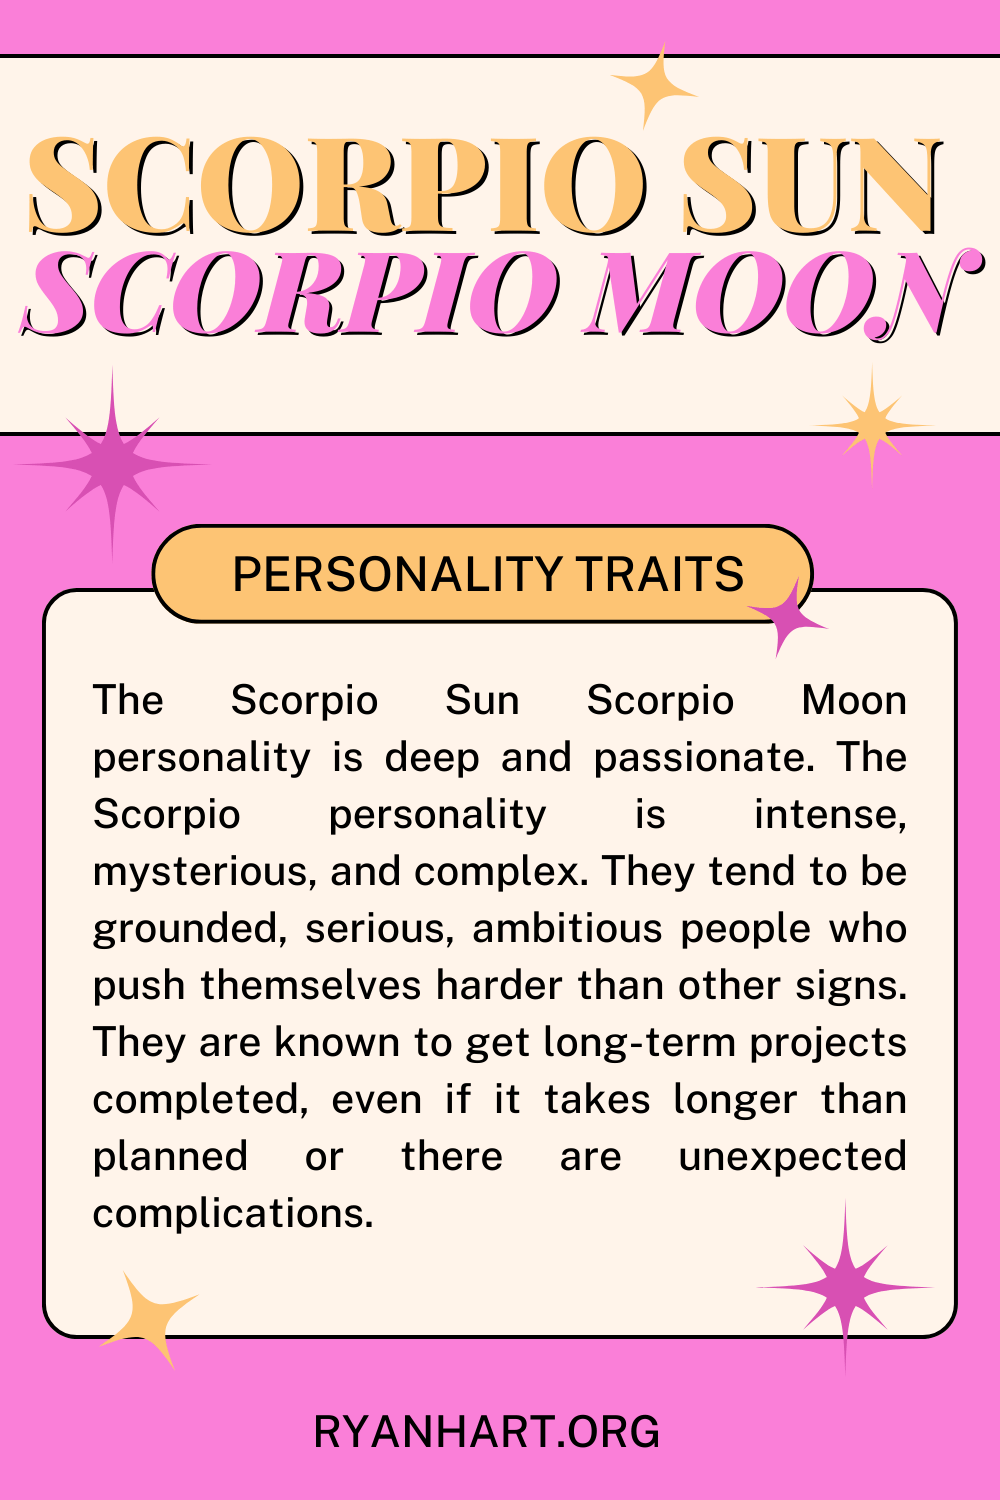 Scorpio Sun Scorpio Moon Description